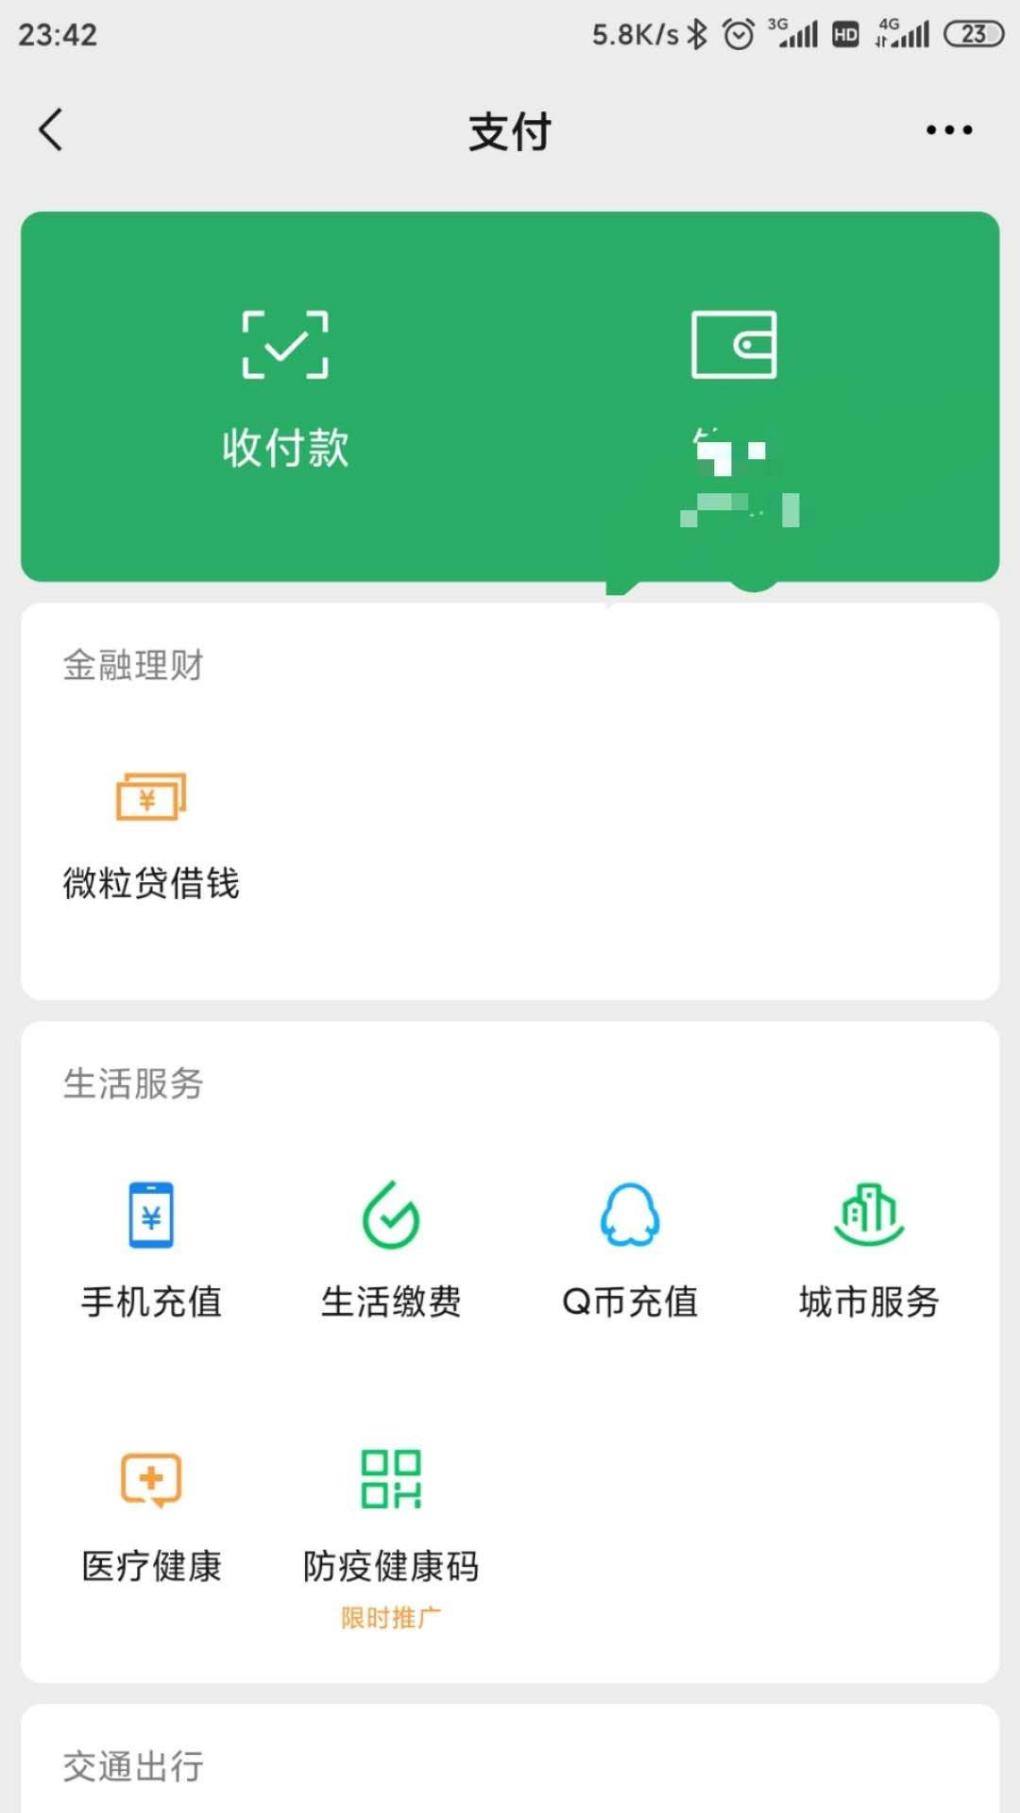 V.x钱包可以借钱了-惠小助(52huixz.com)